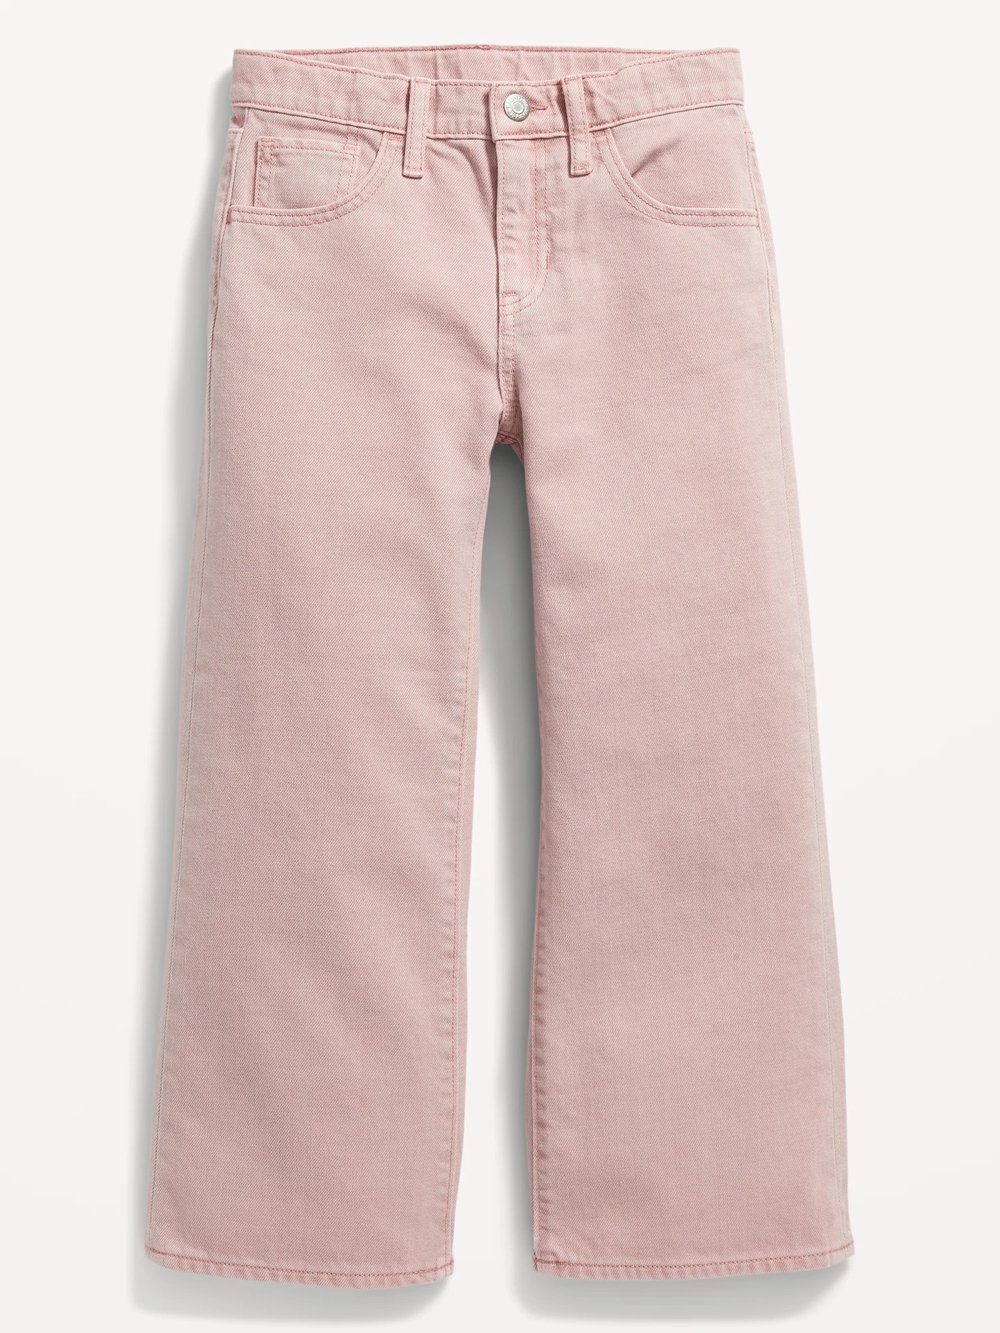 Pink Jeans.jpg